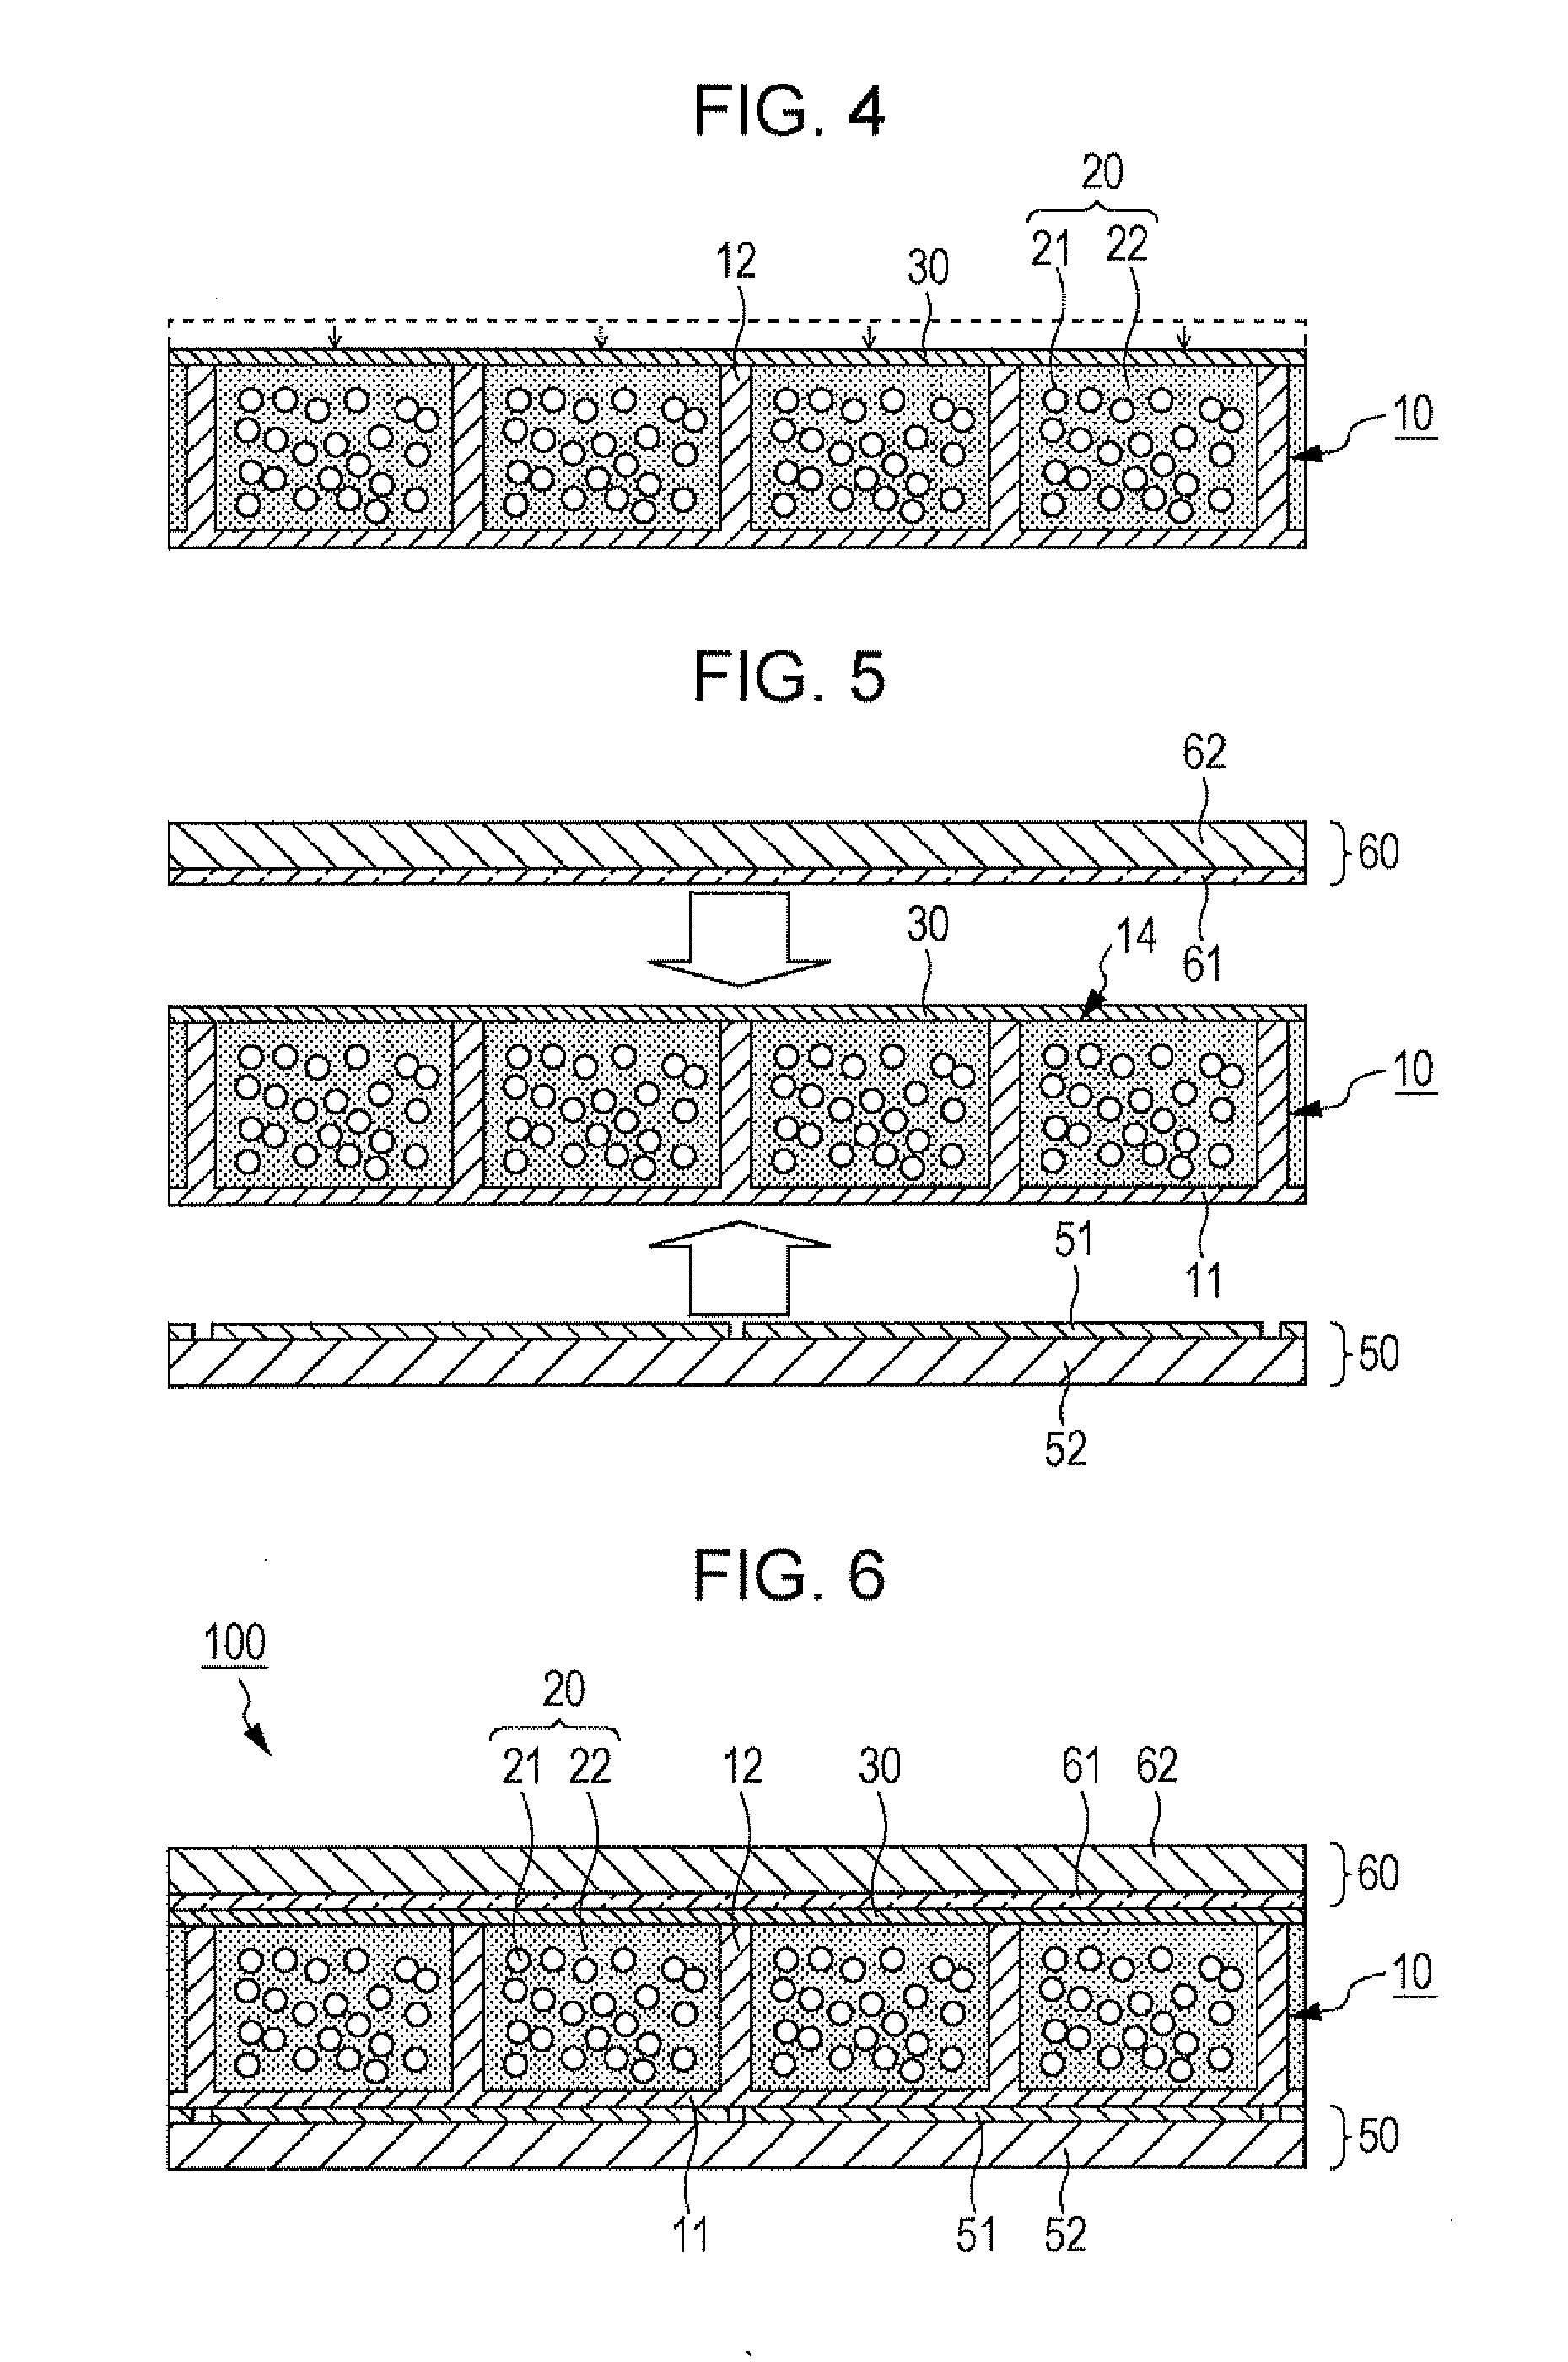 Method for manufacturing electrophoretic display apparatus